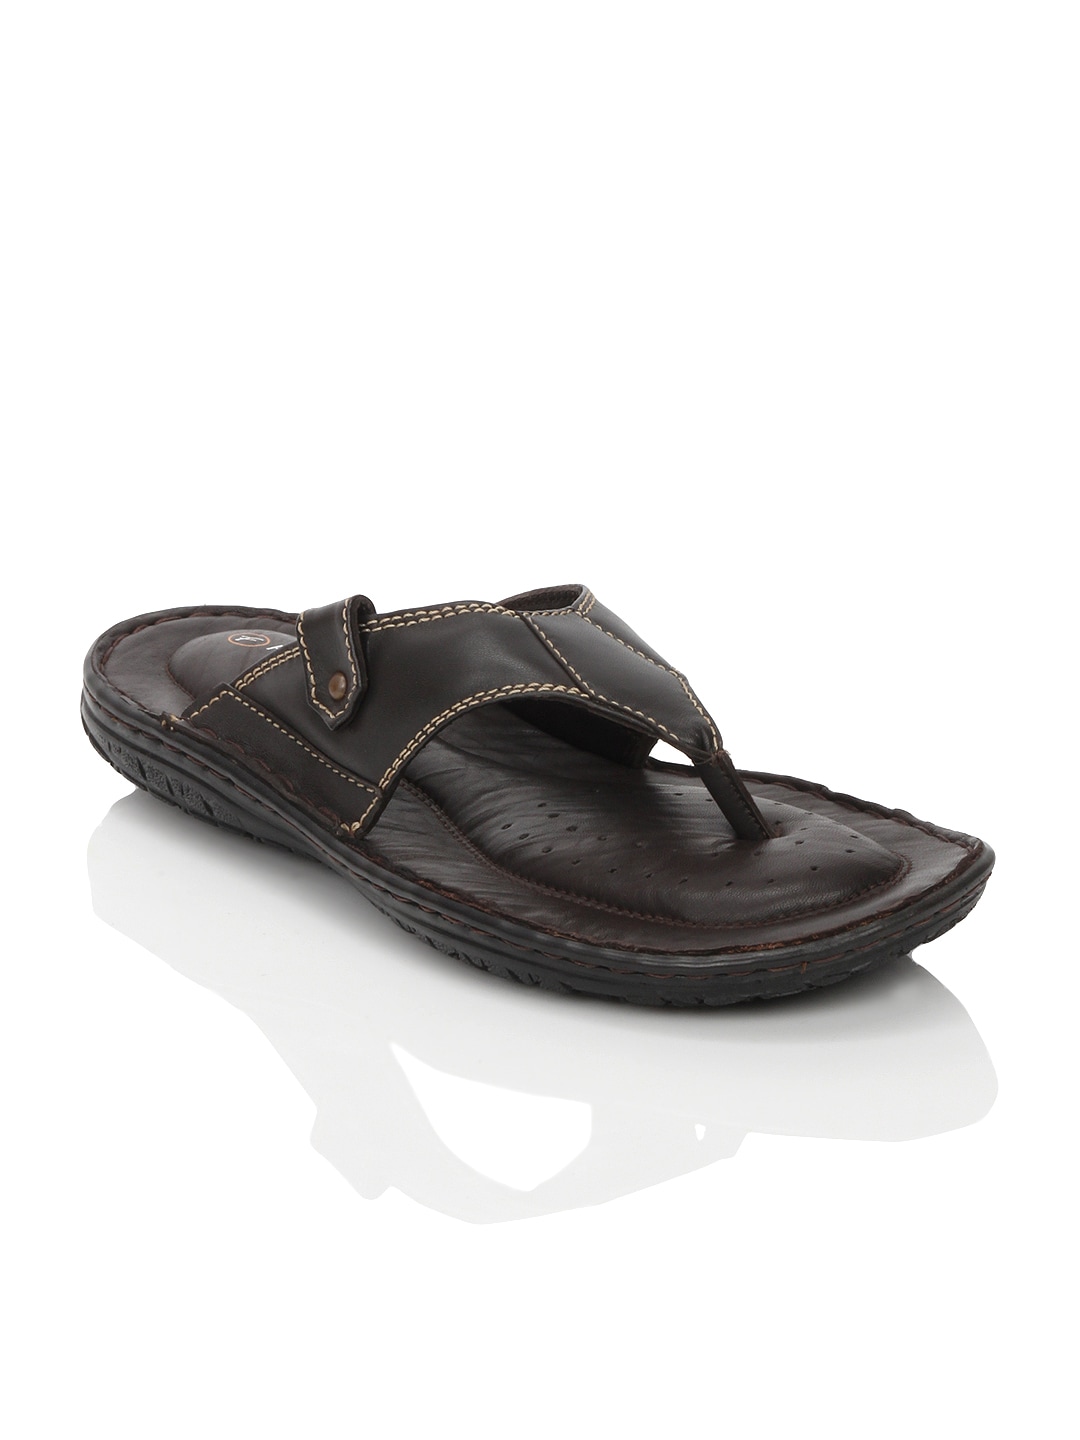 Franco Leone Men Brown Sandals